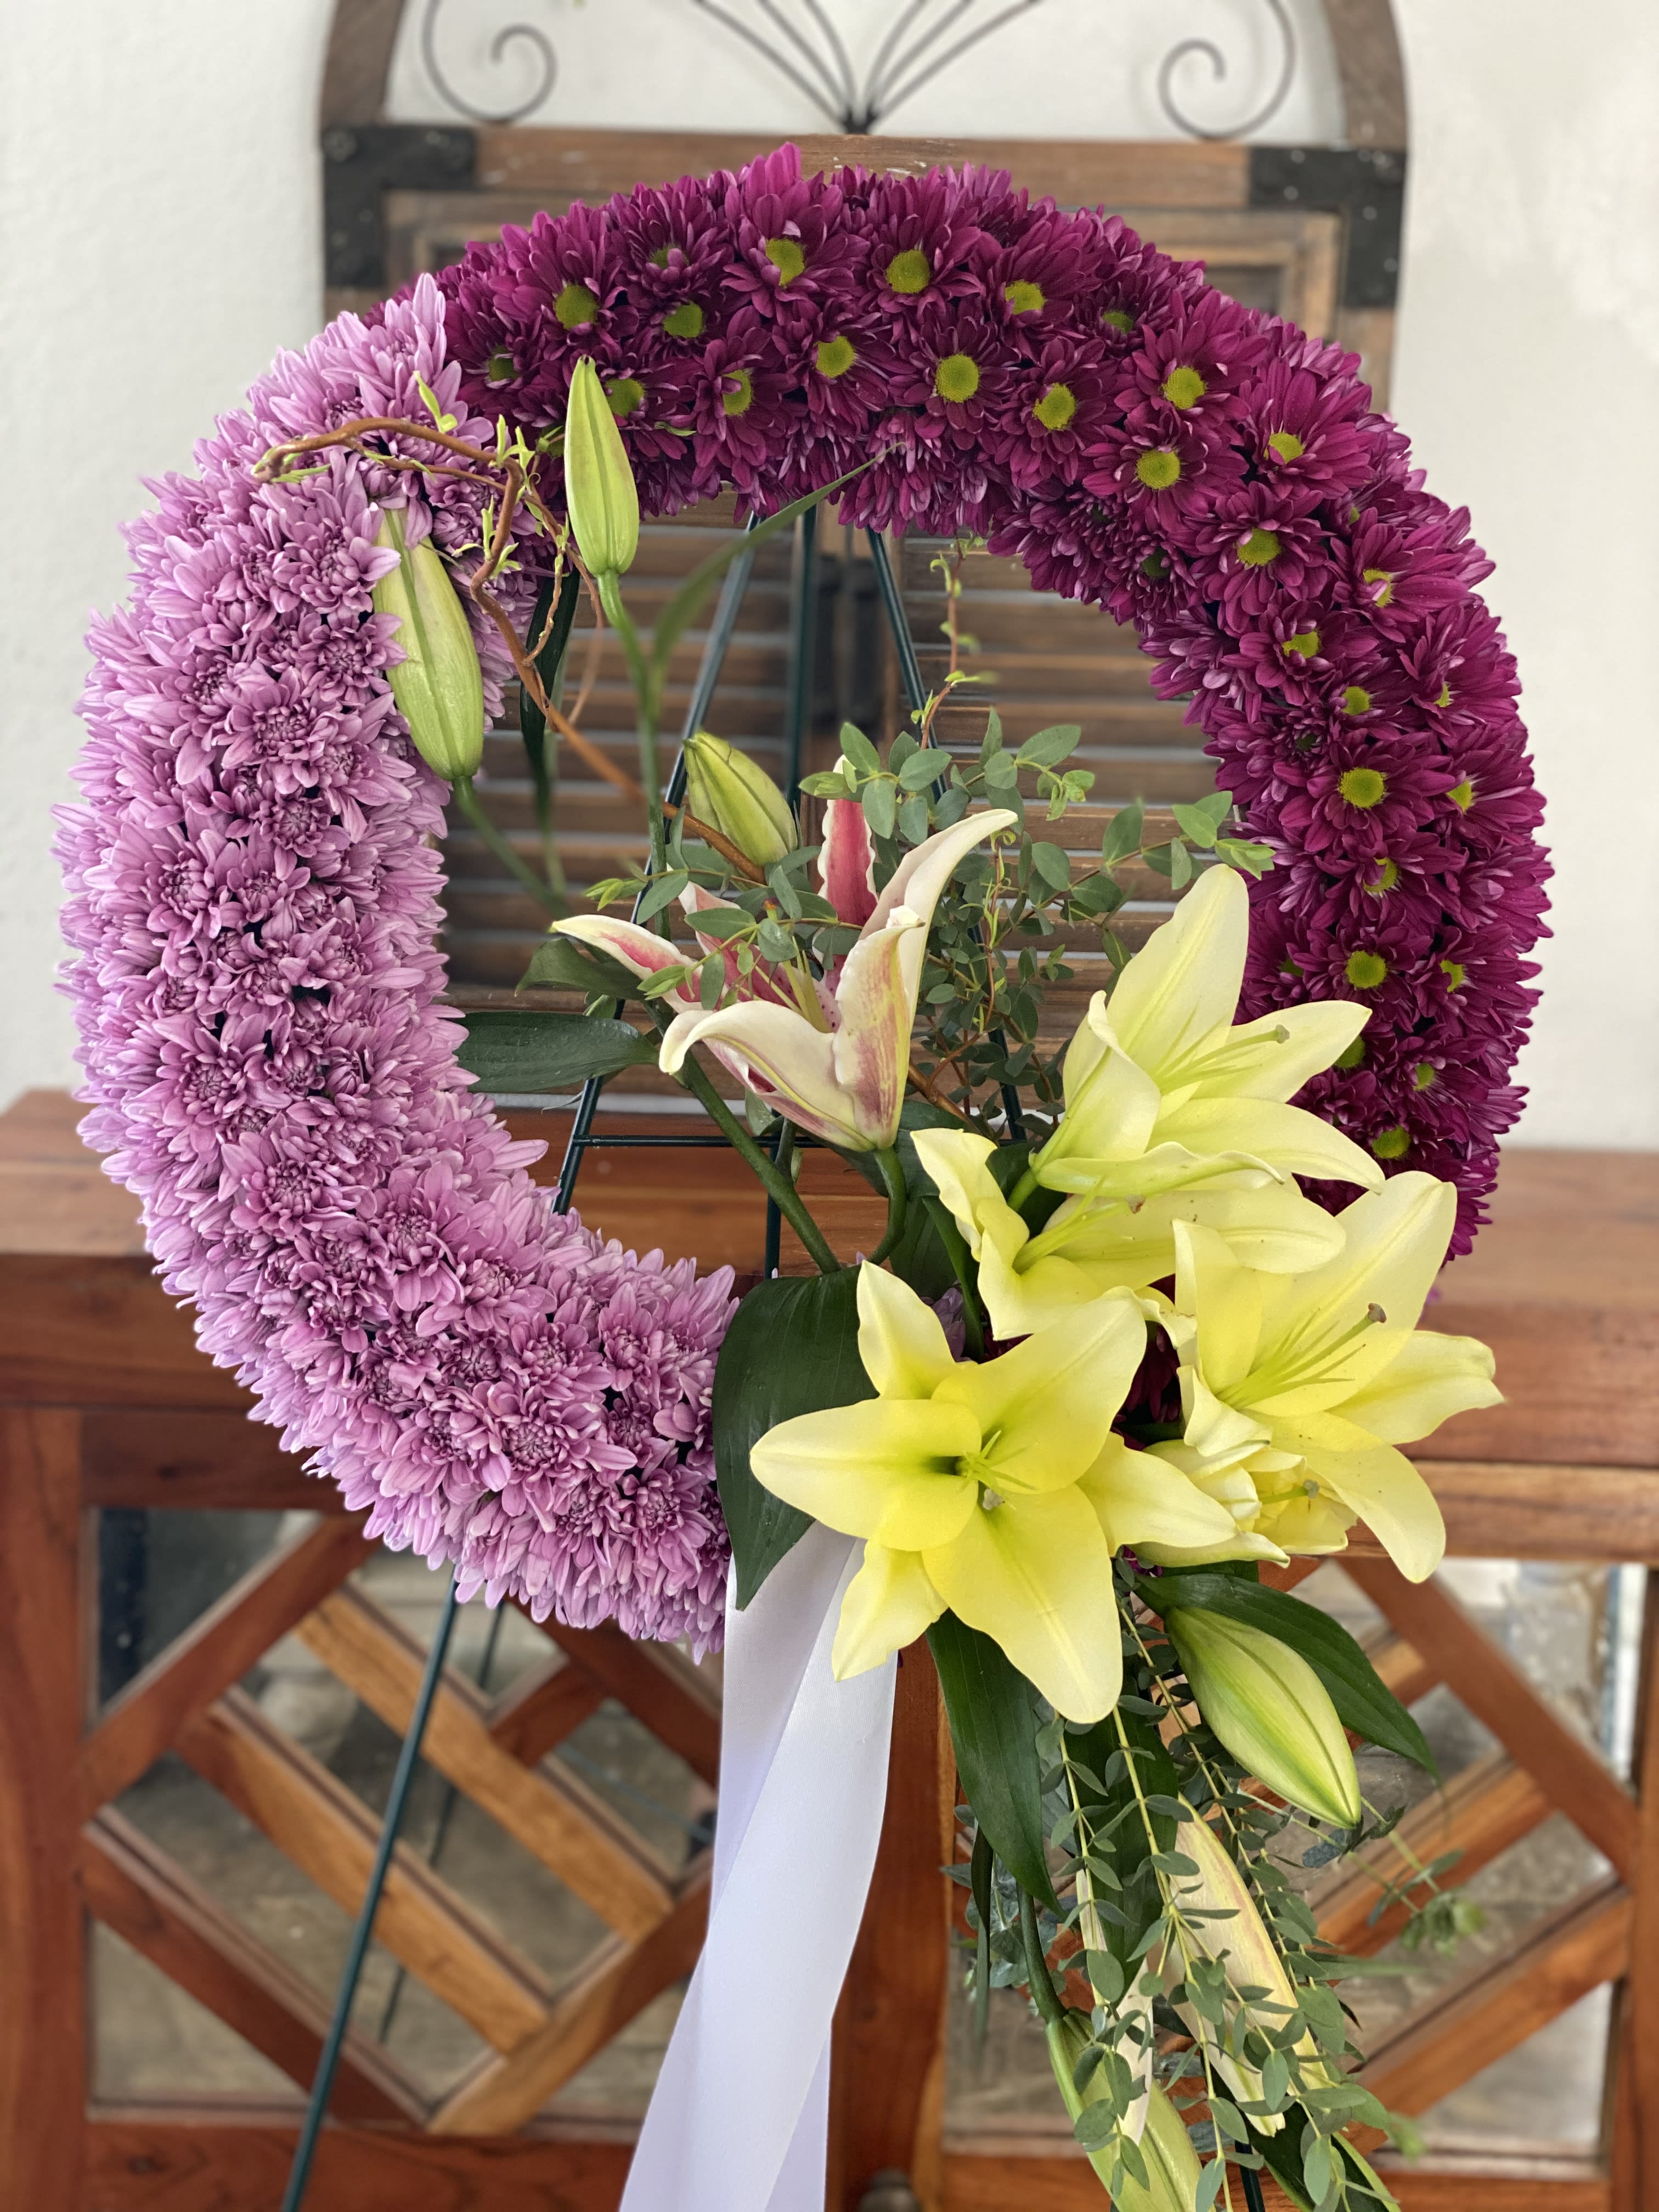 Ombre wreath  - Sympathy ombre wreath in purples.